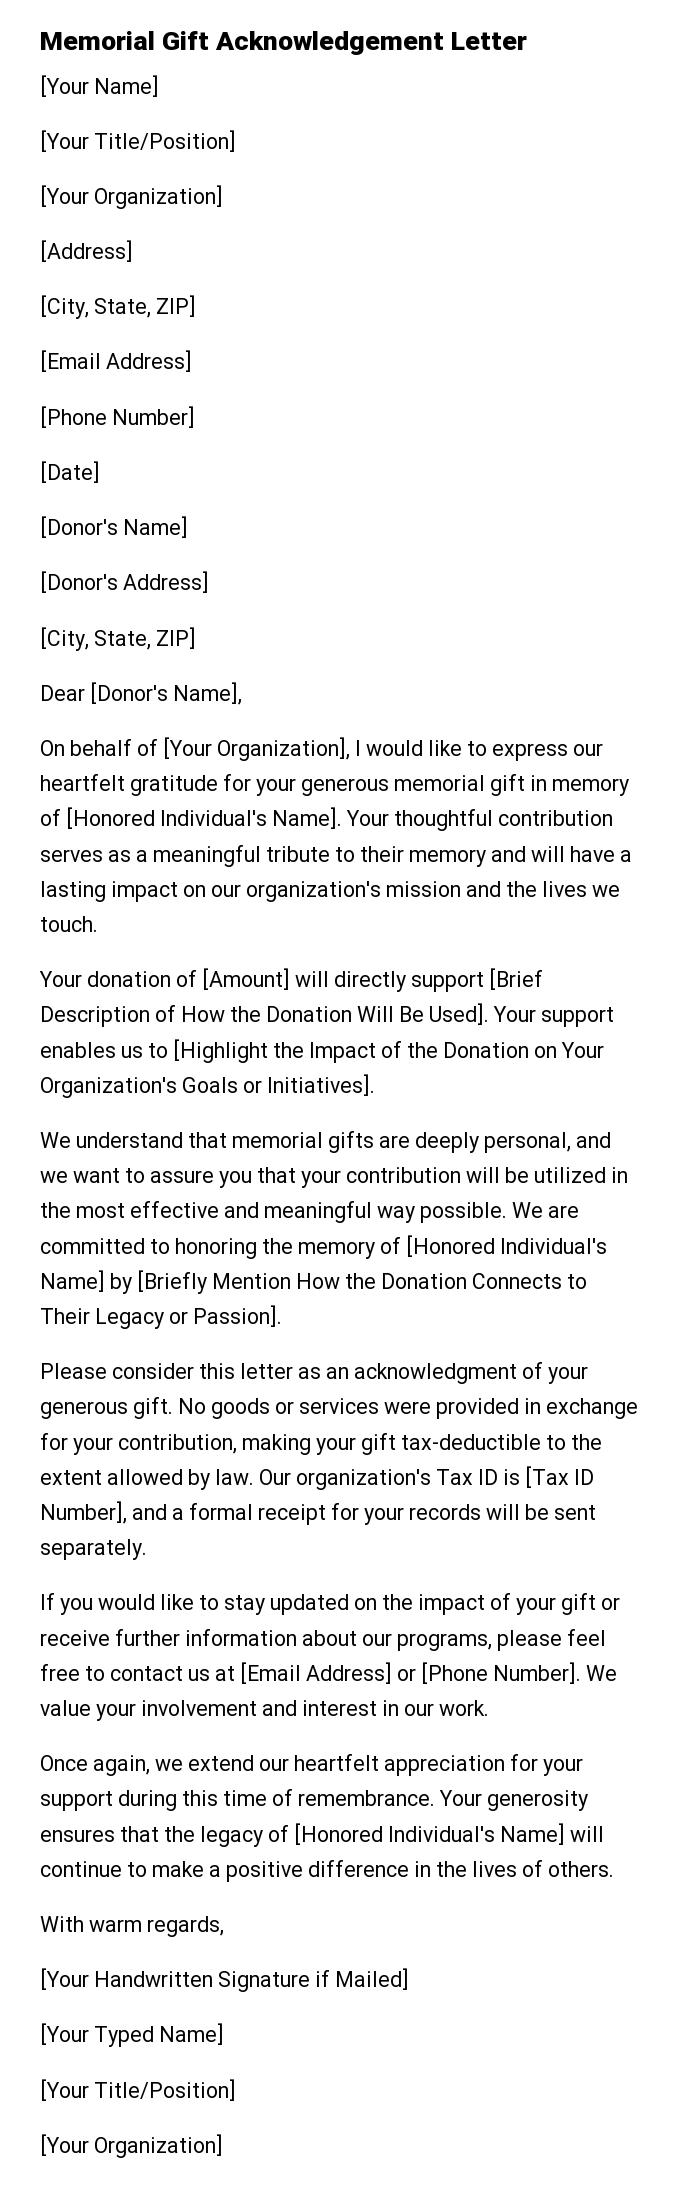 Memorial Gift Acknowledgement Letter